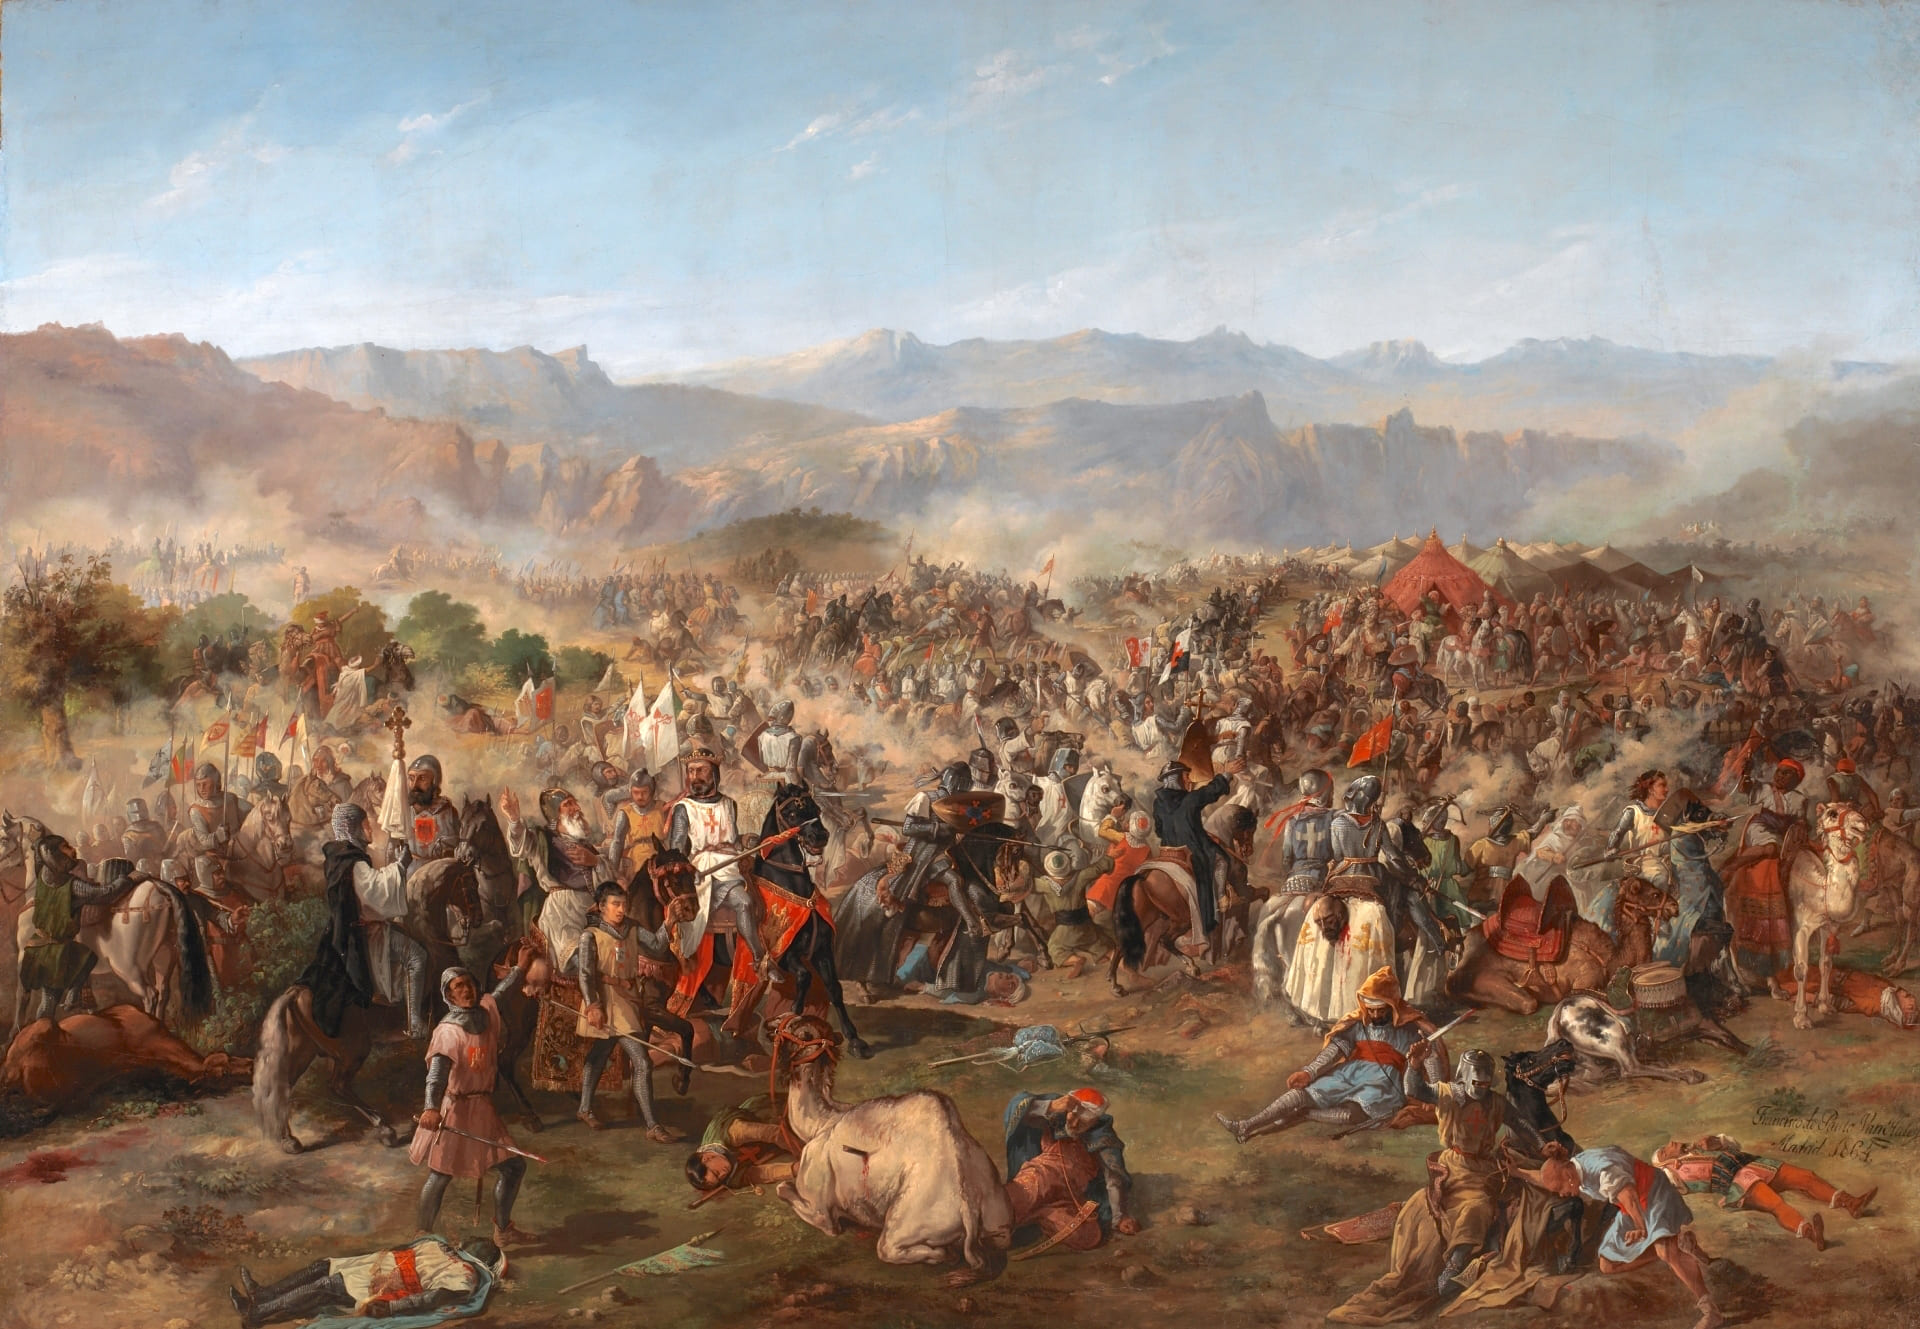 Las Navas de Tolosa Muharebesi: Reconquista